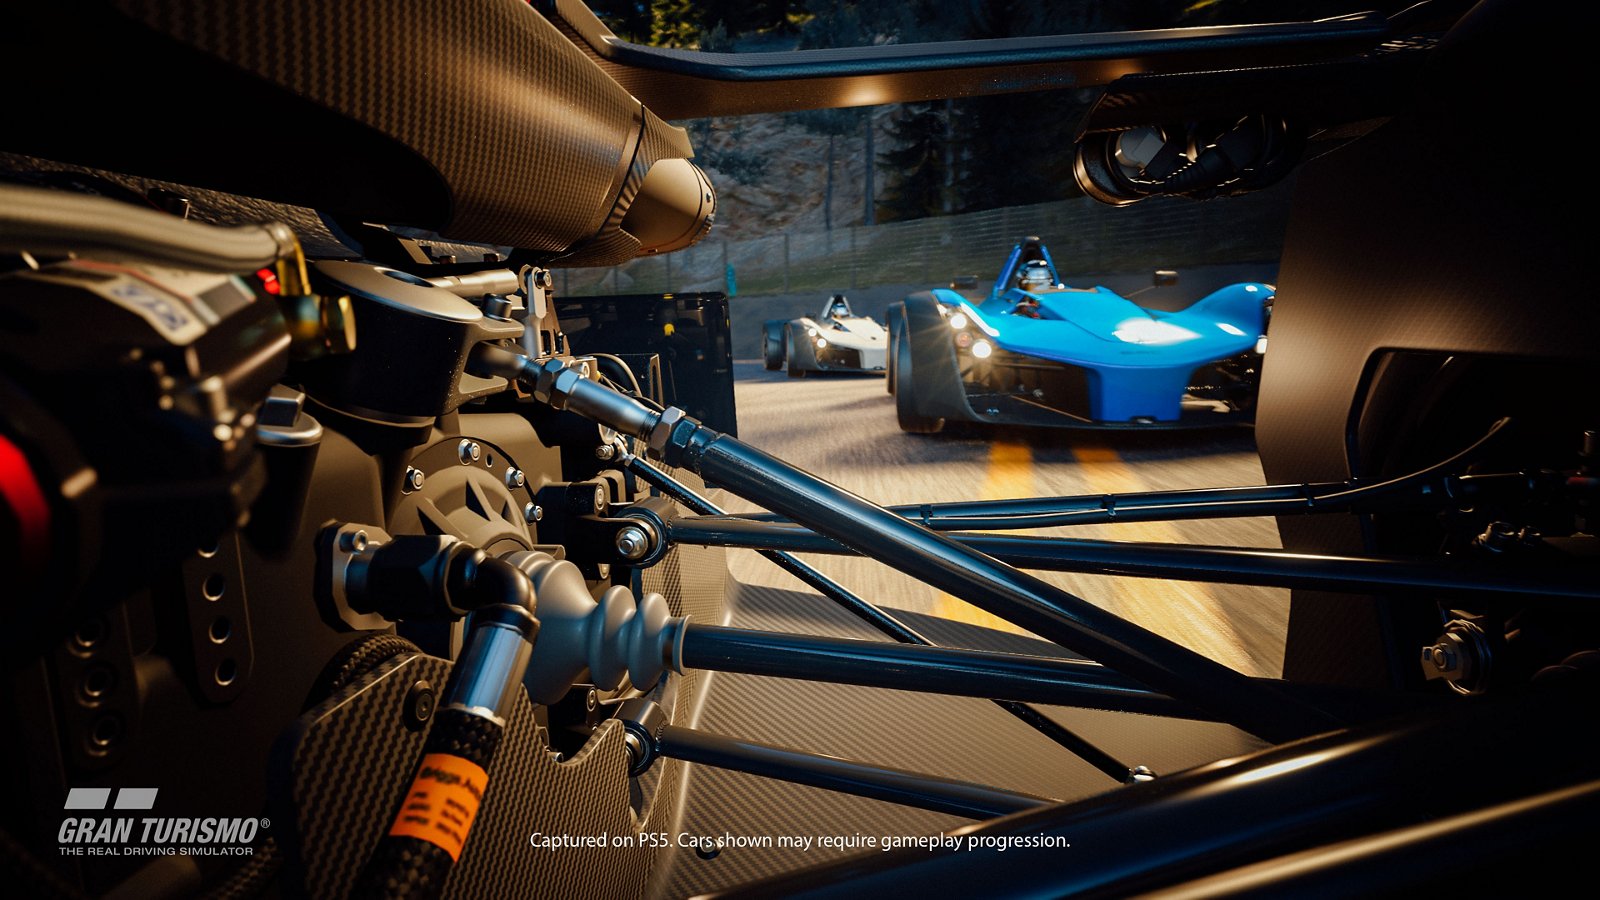 2021 video game releases - Gran Turismo 7